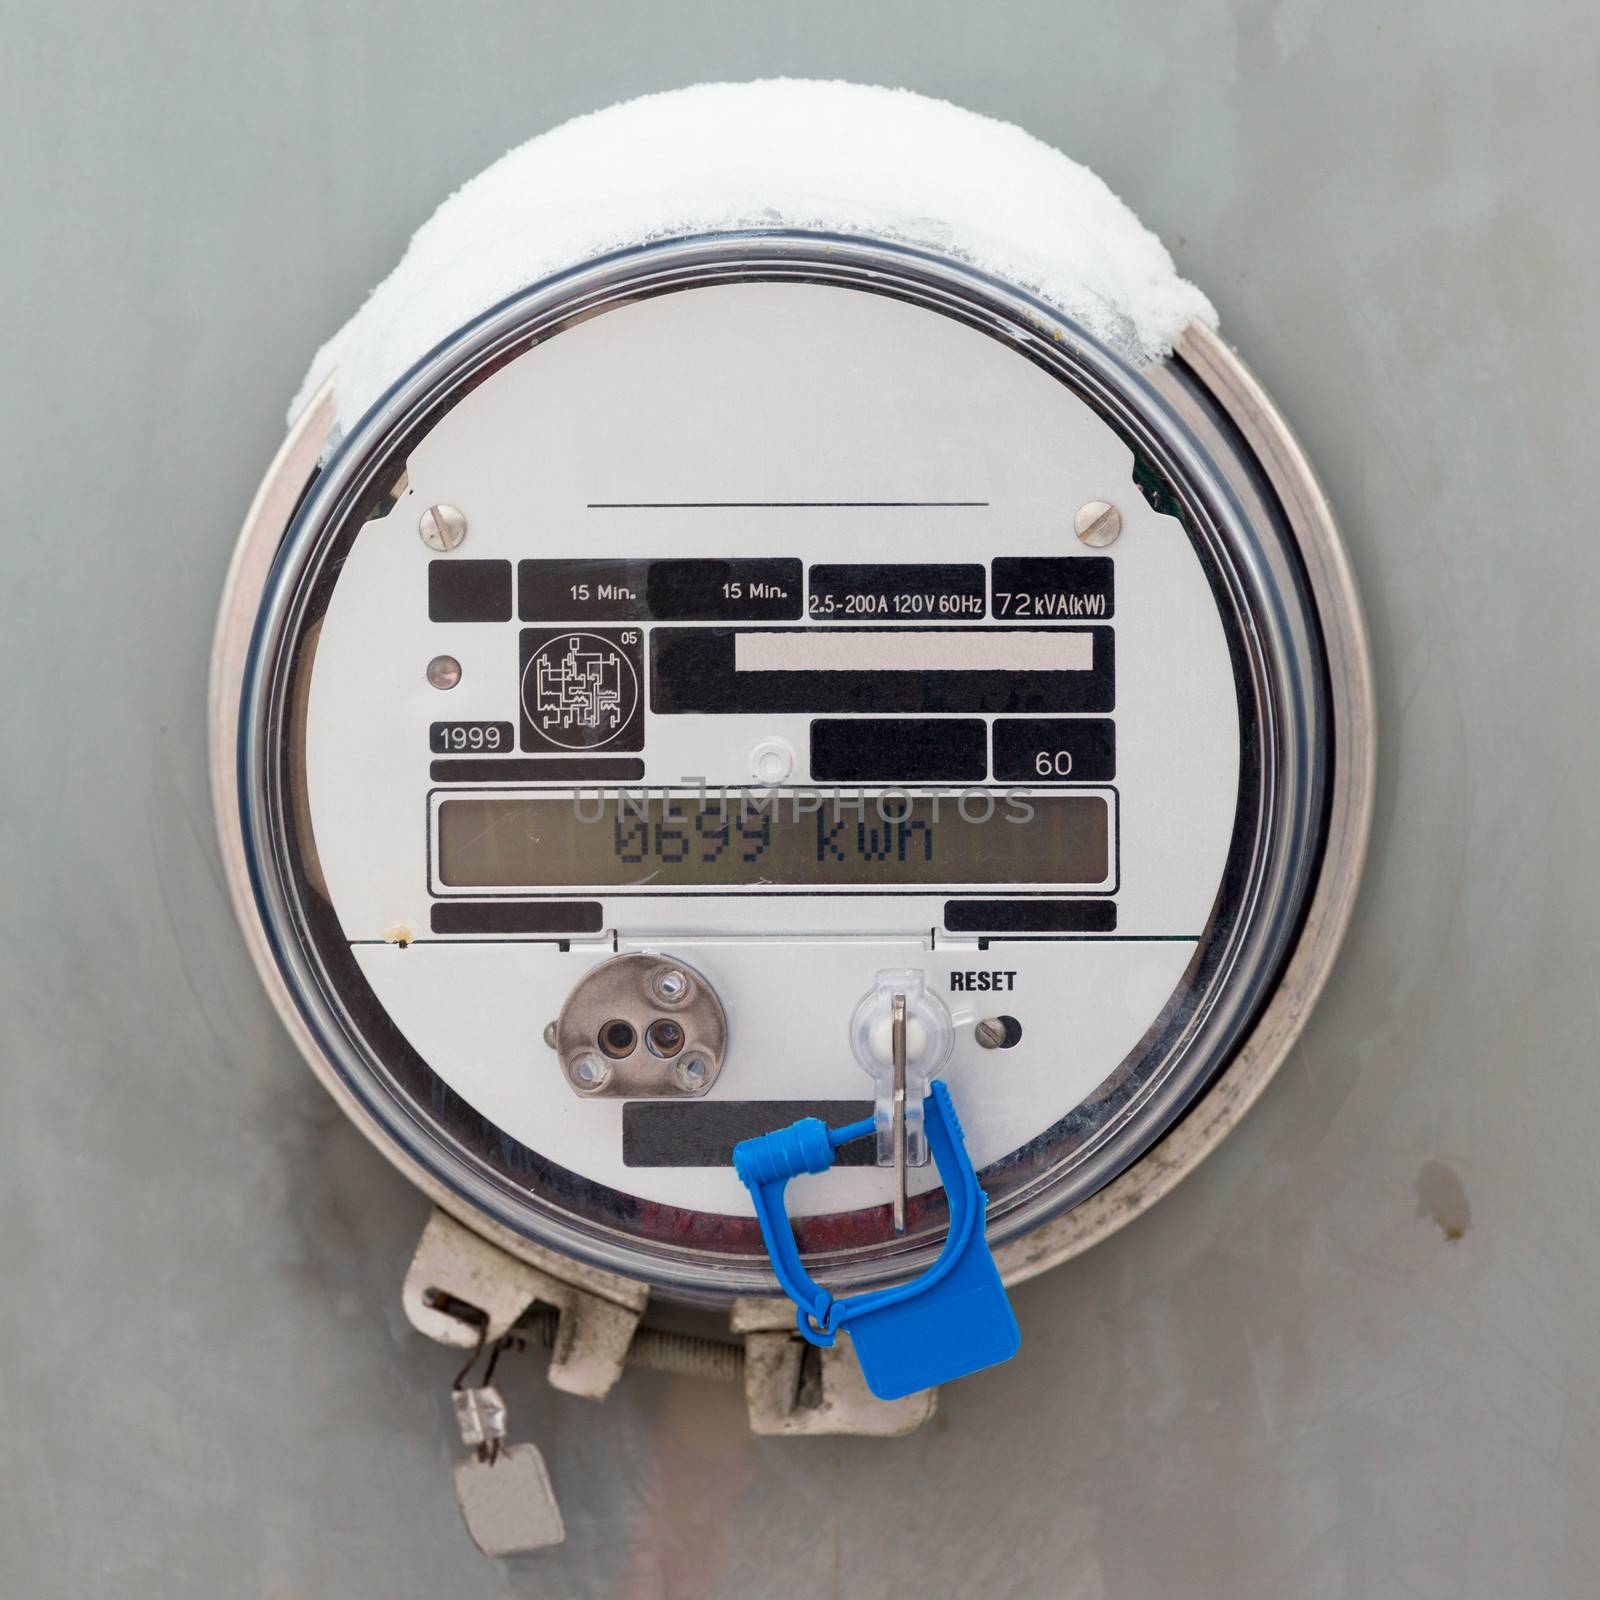 Modern smart grid residential digital power supply meter displays kilowatthours of consumed electric energy